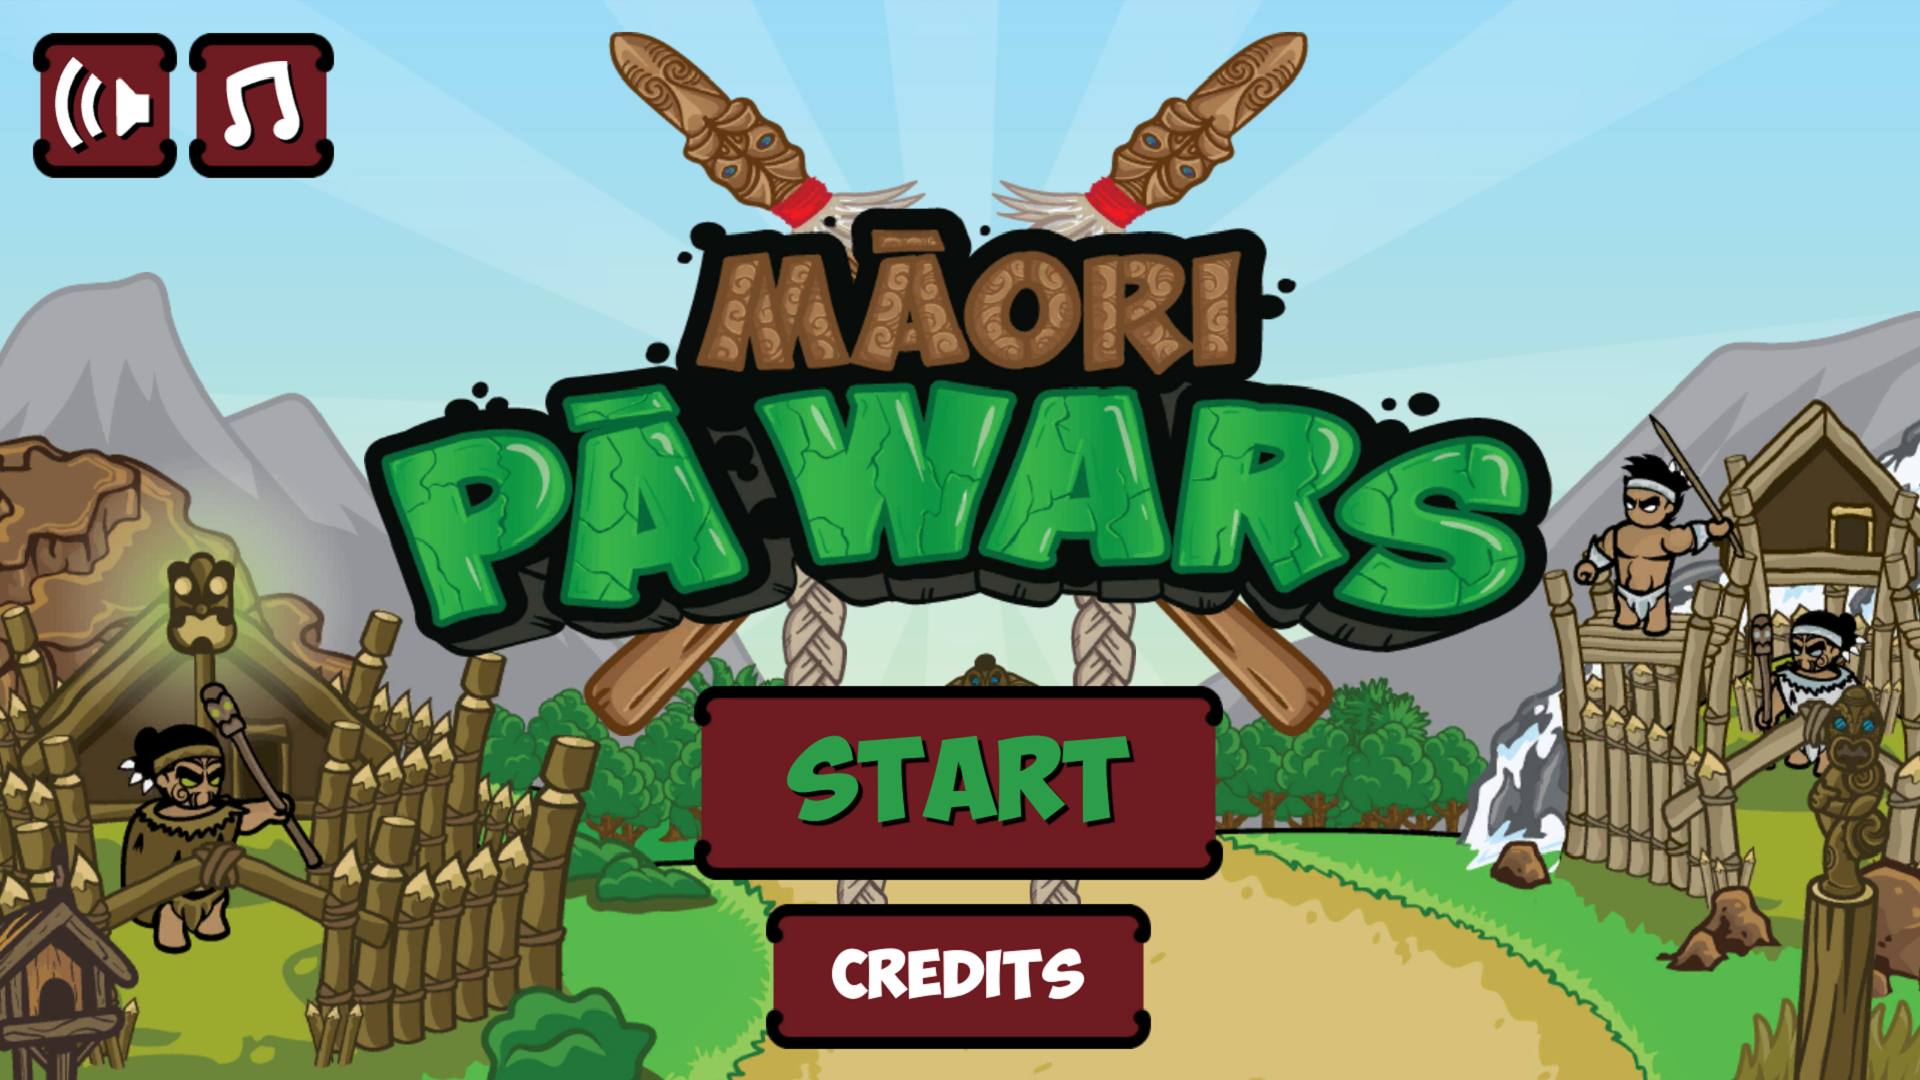 Pa Wars game info.